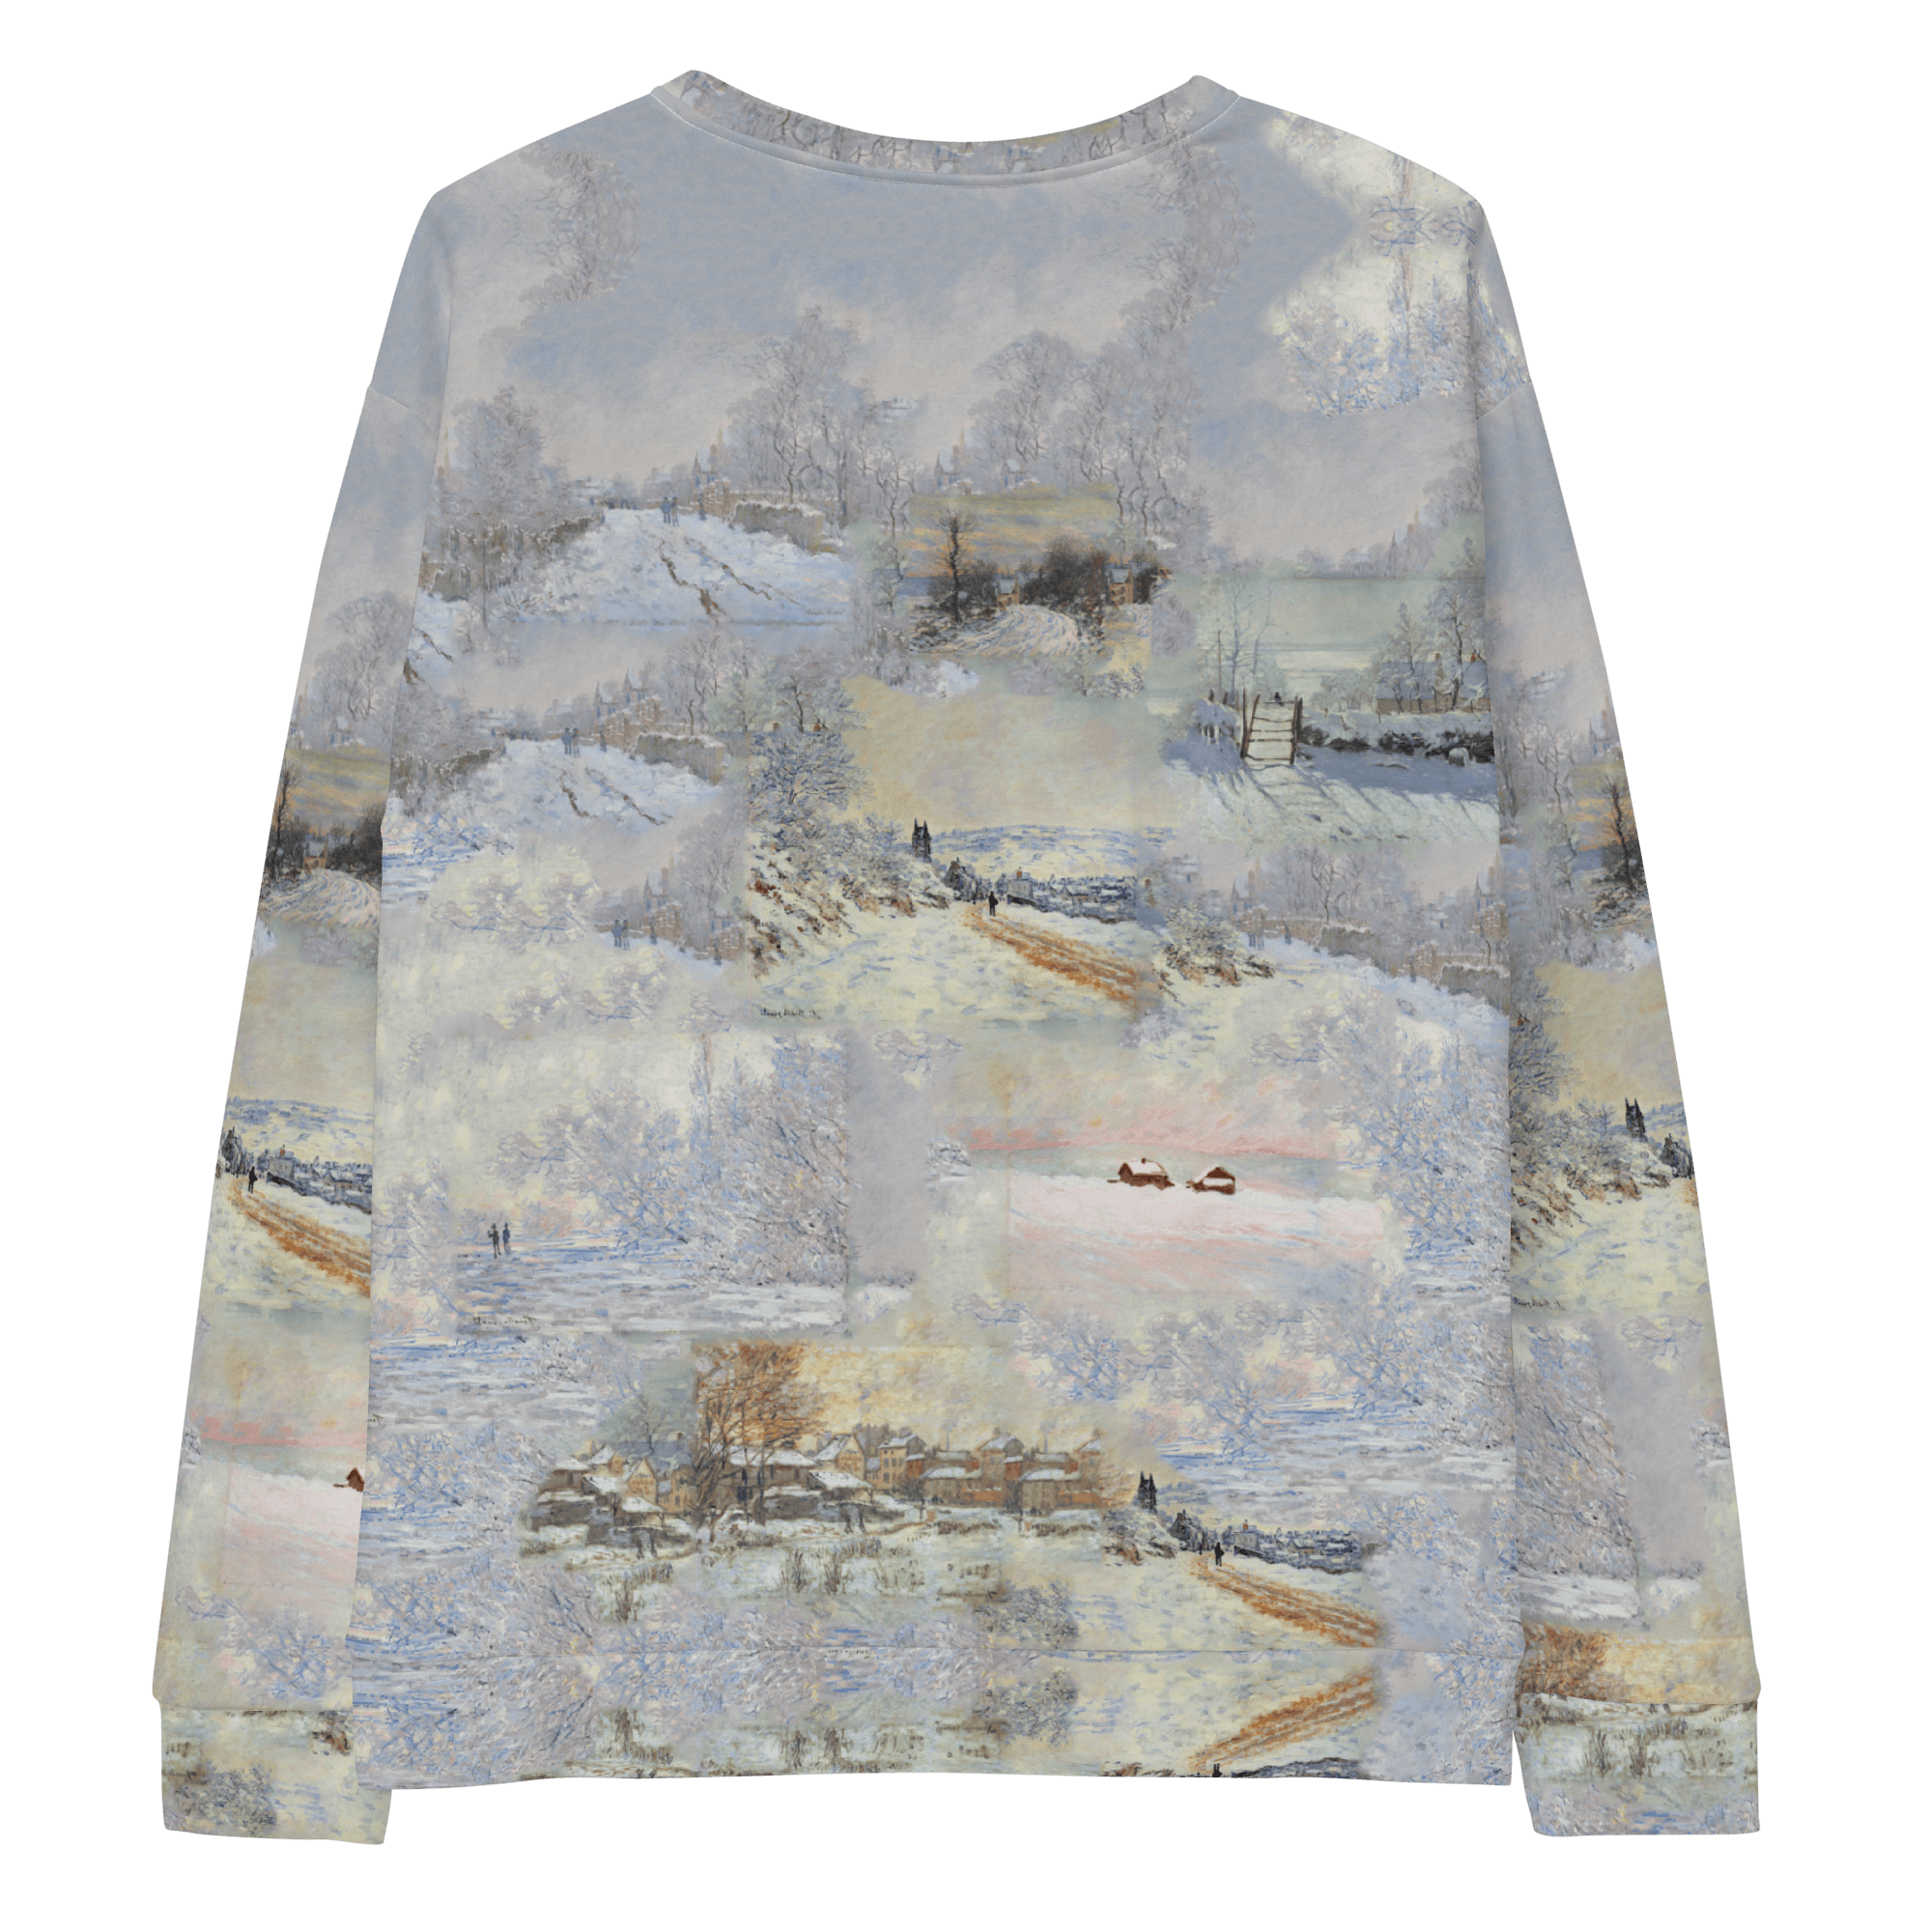 Winter is beautiful® Sweatshirt (7/7 pieces for sale) - Kikillo Club